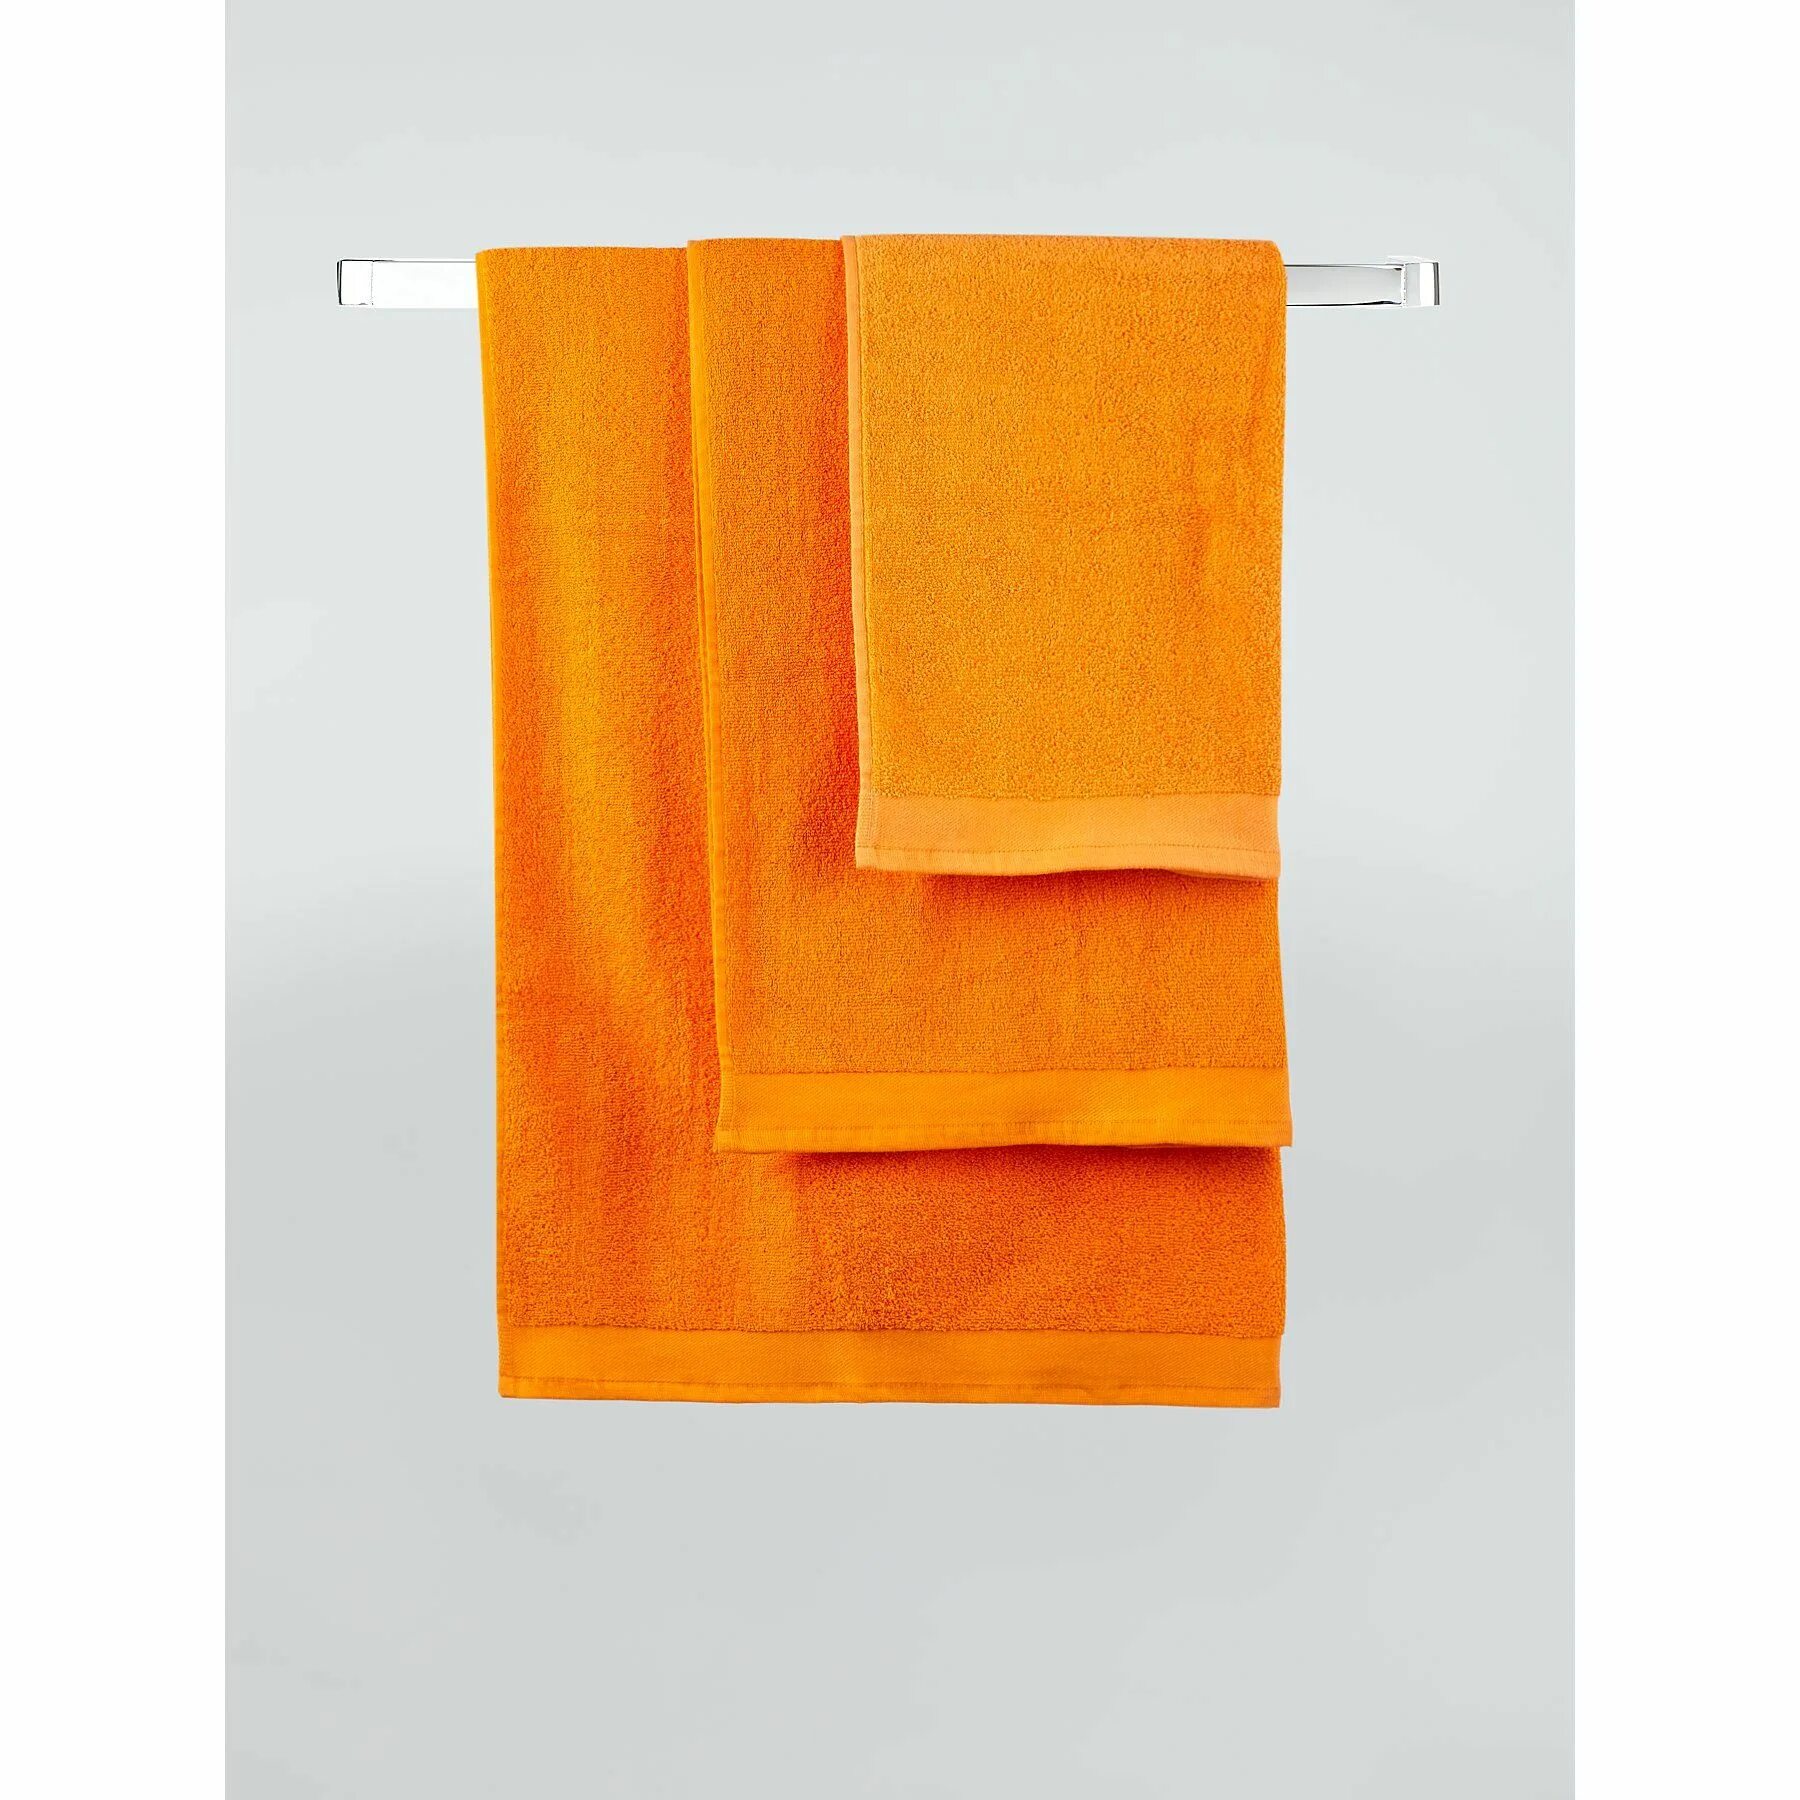 Оранжевое полотенце. Оранжевый полотенце для стола. Размер полотенца Bath Sheet. Полотенце Udo.